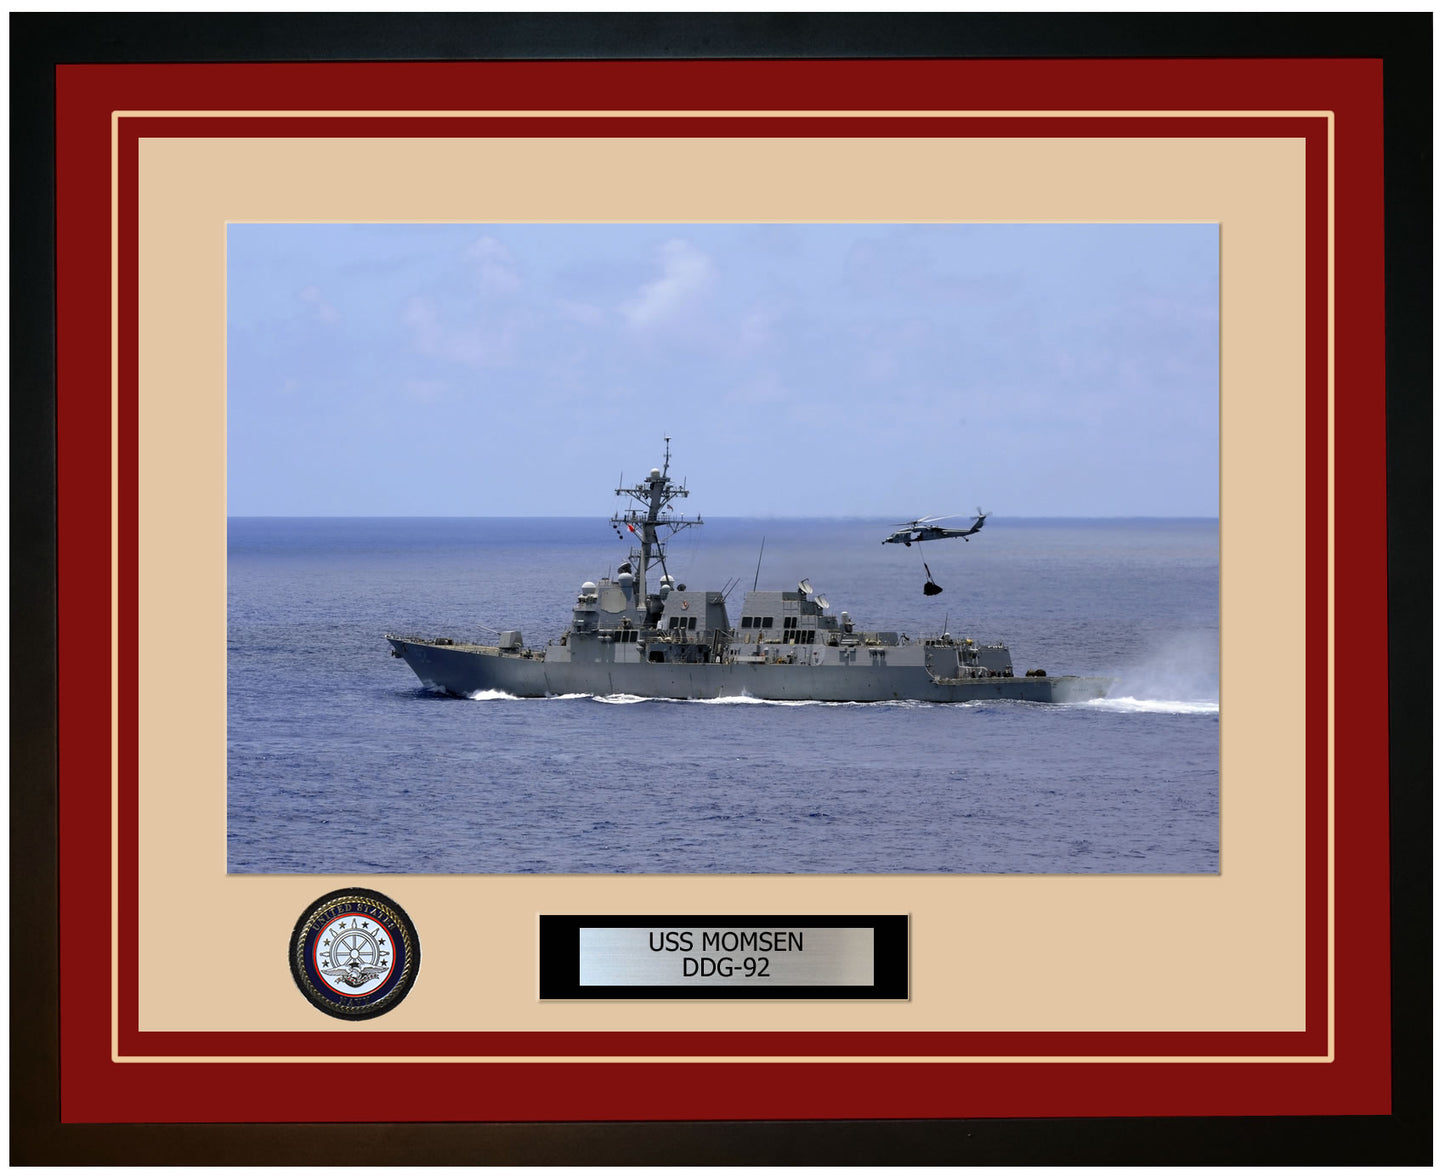 USS MOMSEN DDG-92 Framed Navy Ship Photo Burgundy